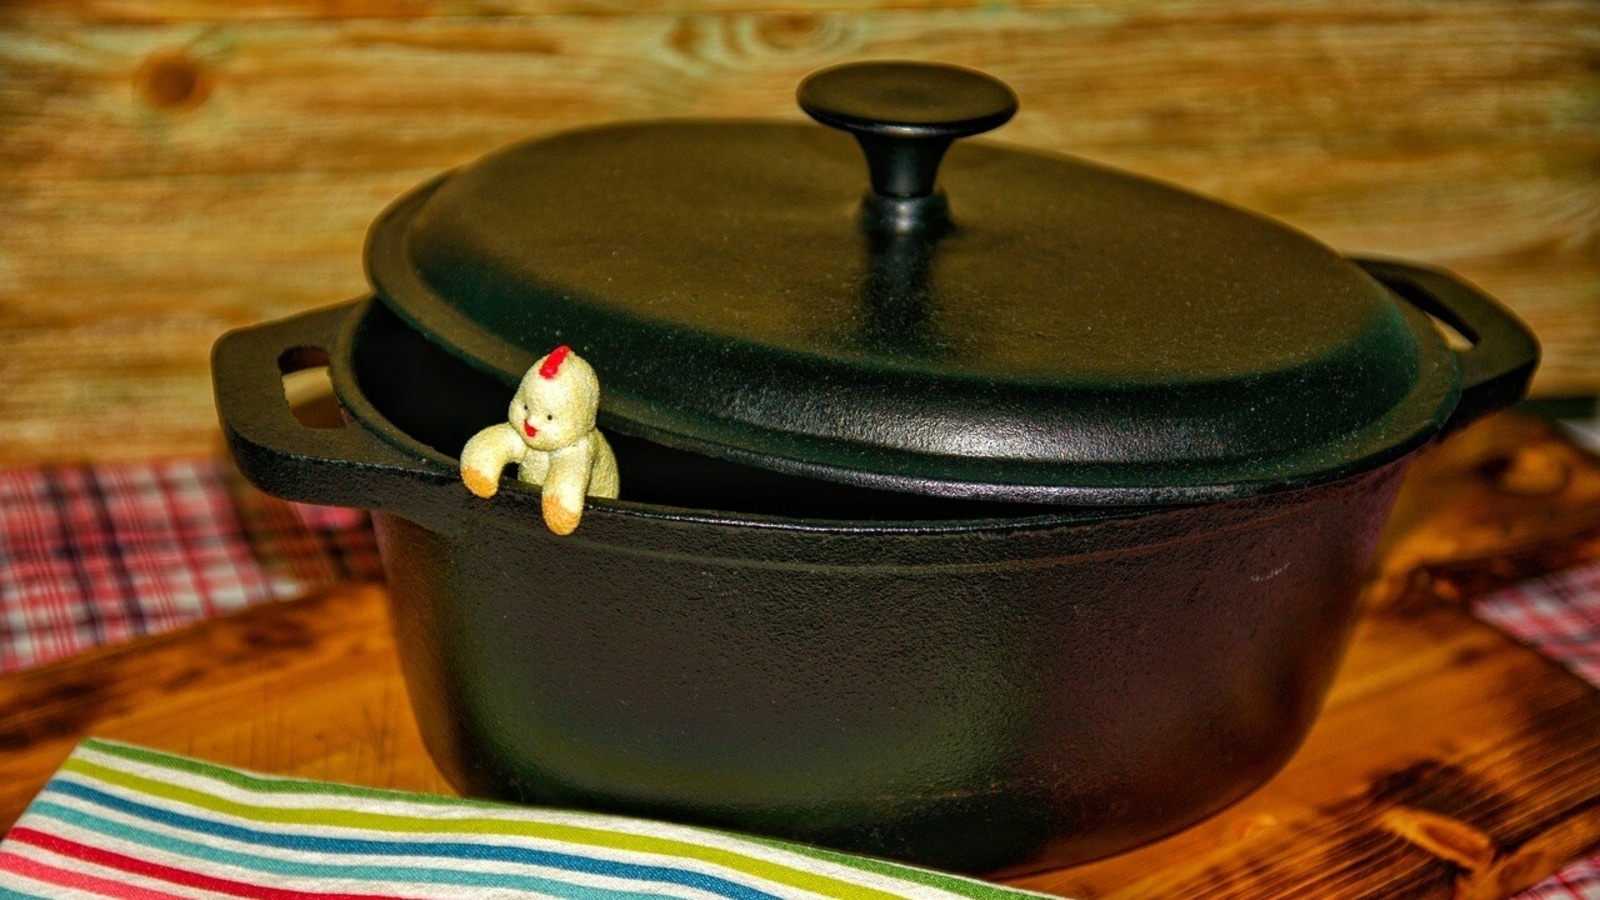 Crock-pot Artisan 5 qt. Round Cast Iron Nonstick Dutch Oven in Sunset Orange with Lid